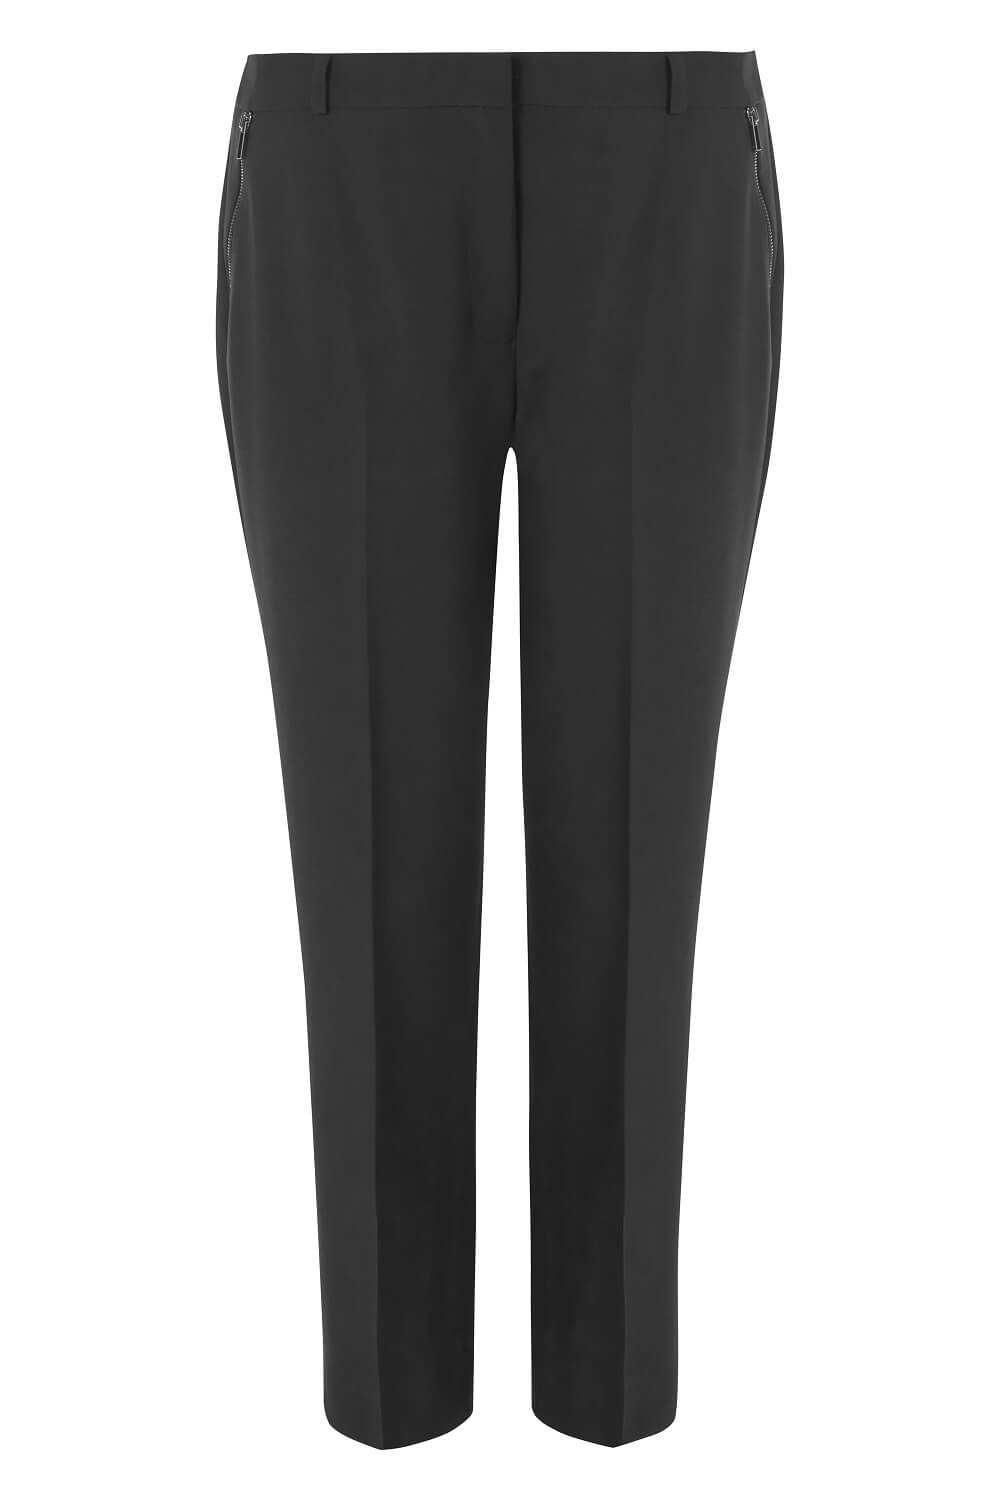 Black Straight Leg Zip Pocket Trousers, Image 4 of 4